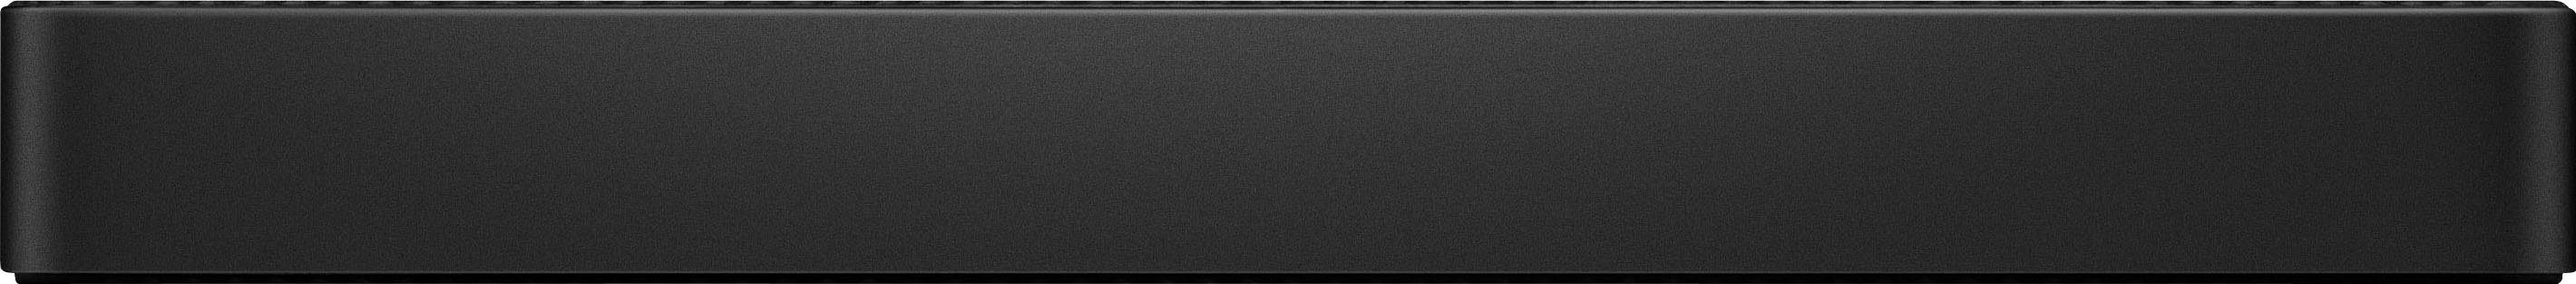 2TB 2,5" TB) (2 Expansion Seagate Portable externe HDD-Festplatte